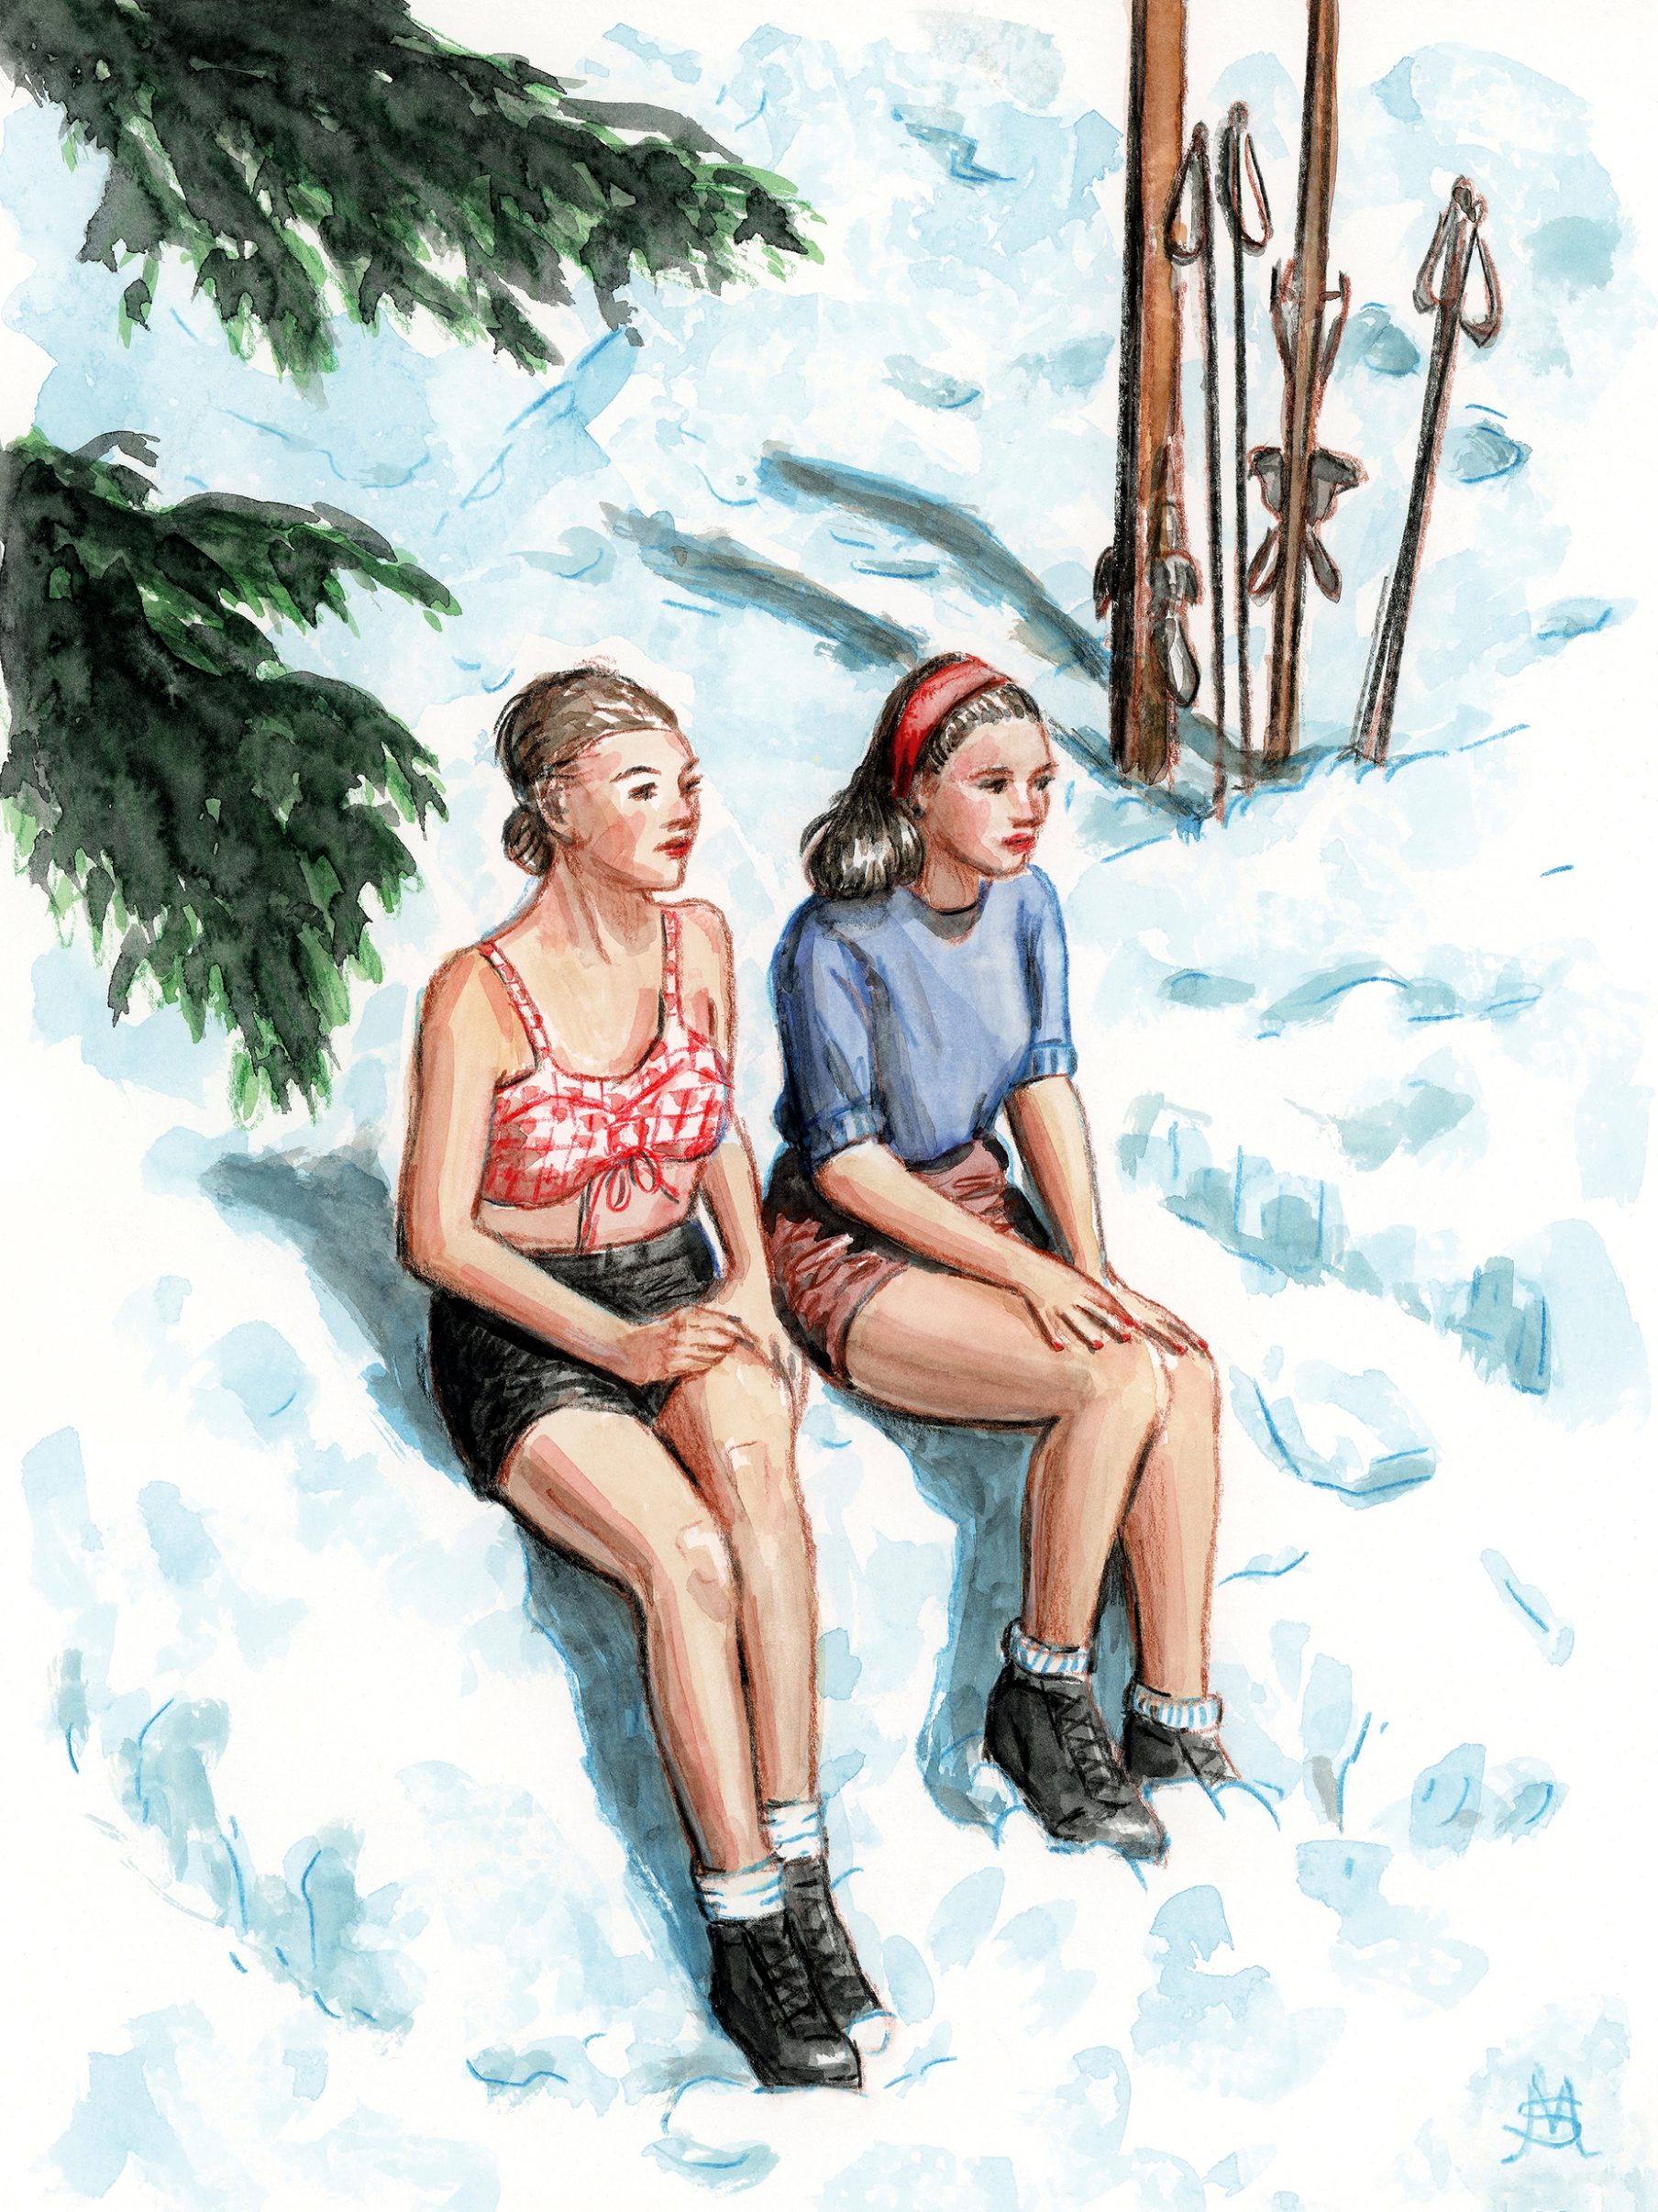 Skiers resting on ski slope, vintage image of two women in snow| © Sarah Morrissette